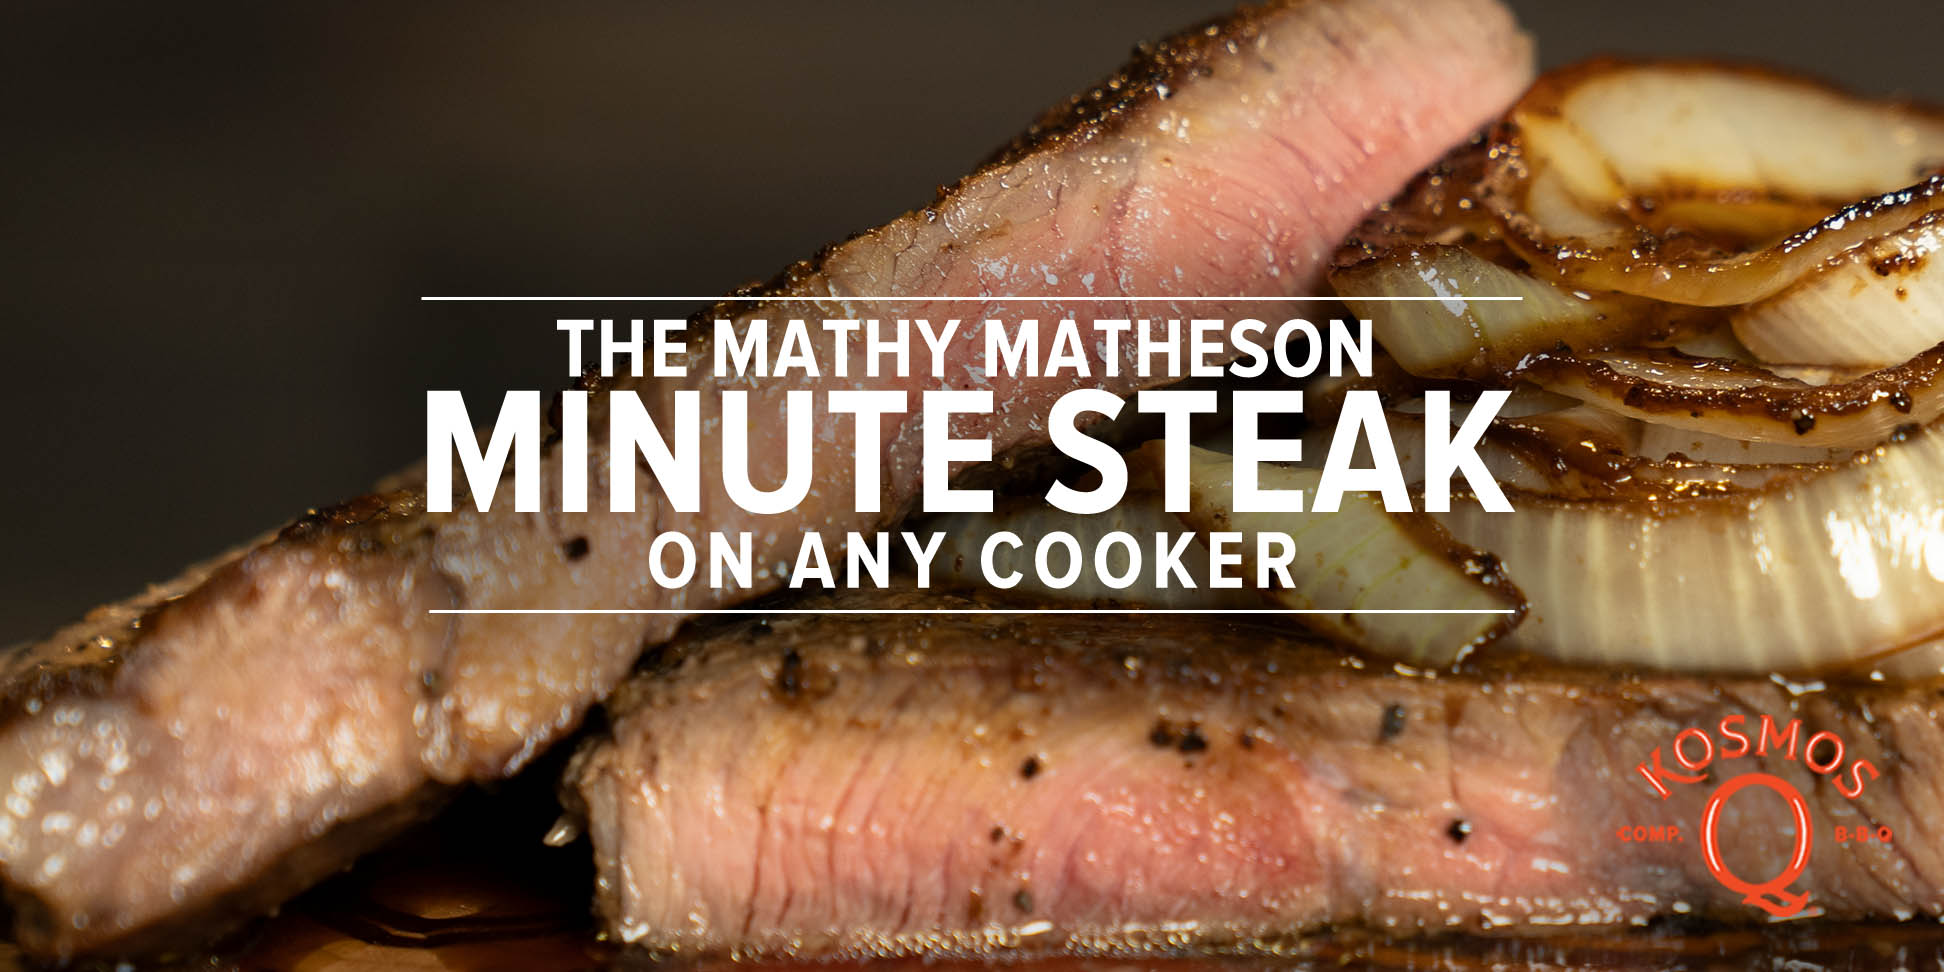 Testing The Matty Matheson Minute Steak!